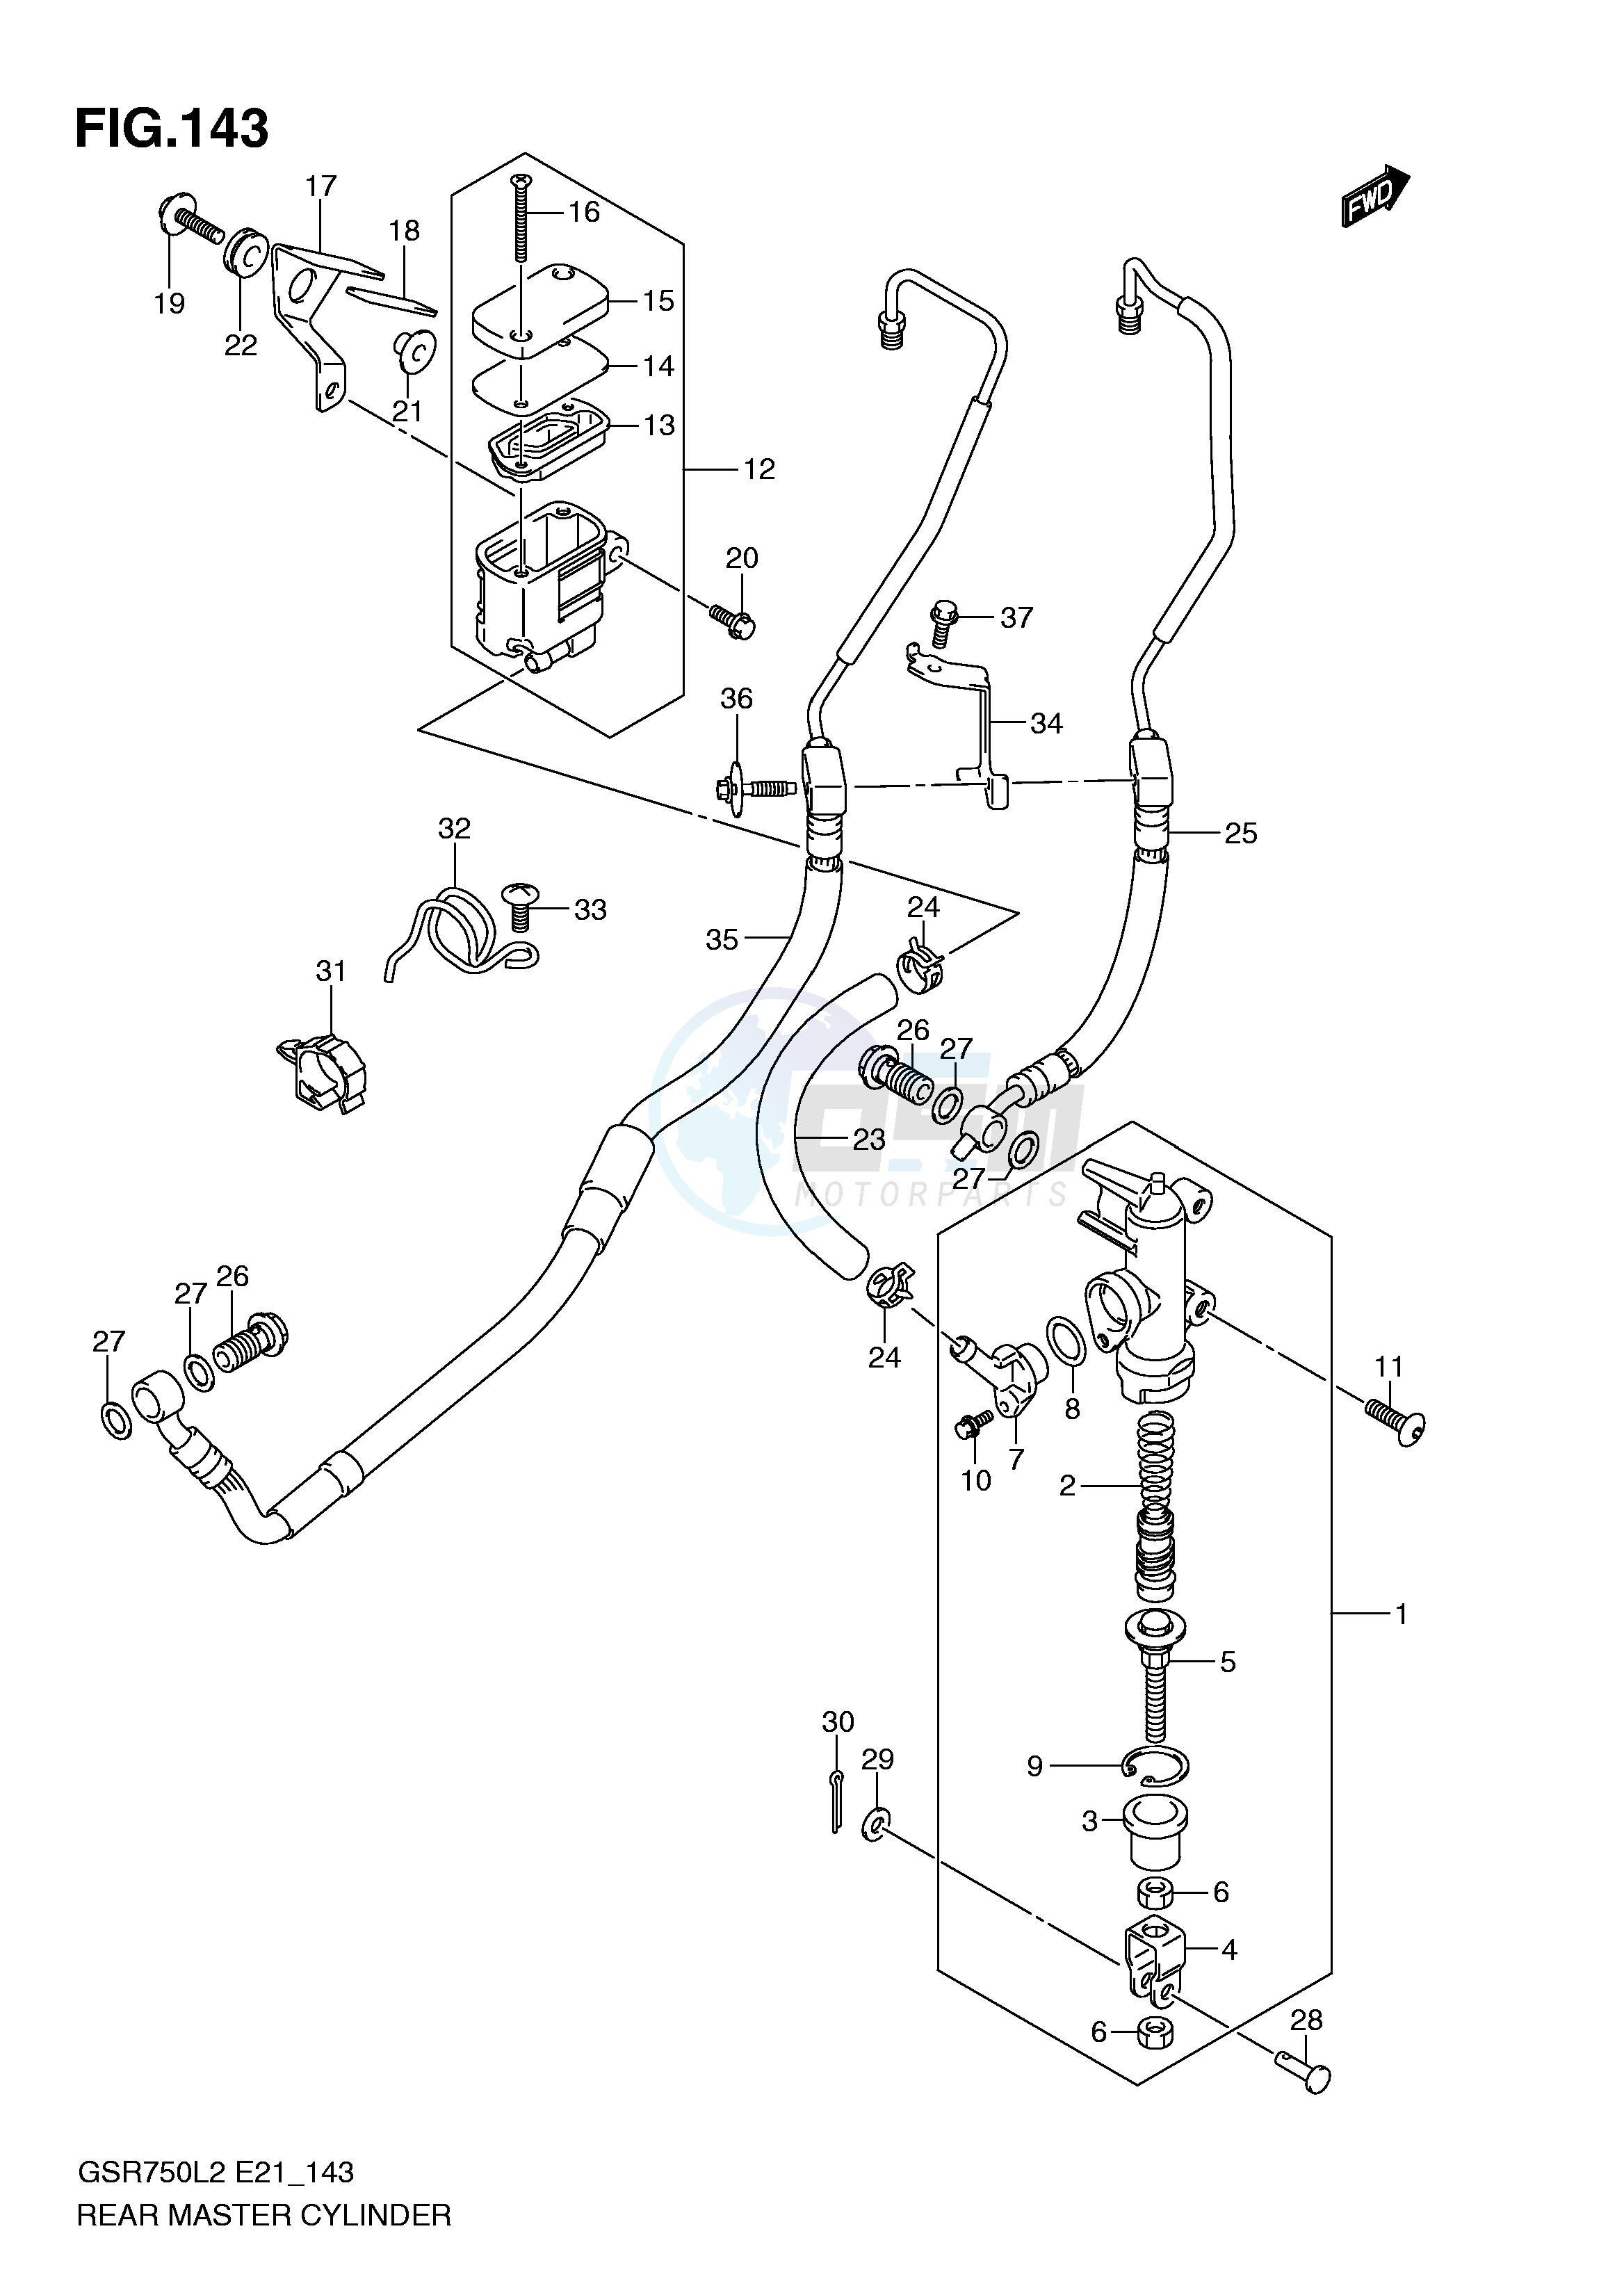 REAR MASTER CYLINDER (GSR750AUEL2 E21) blueprint